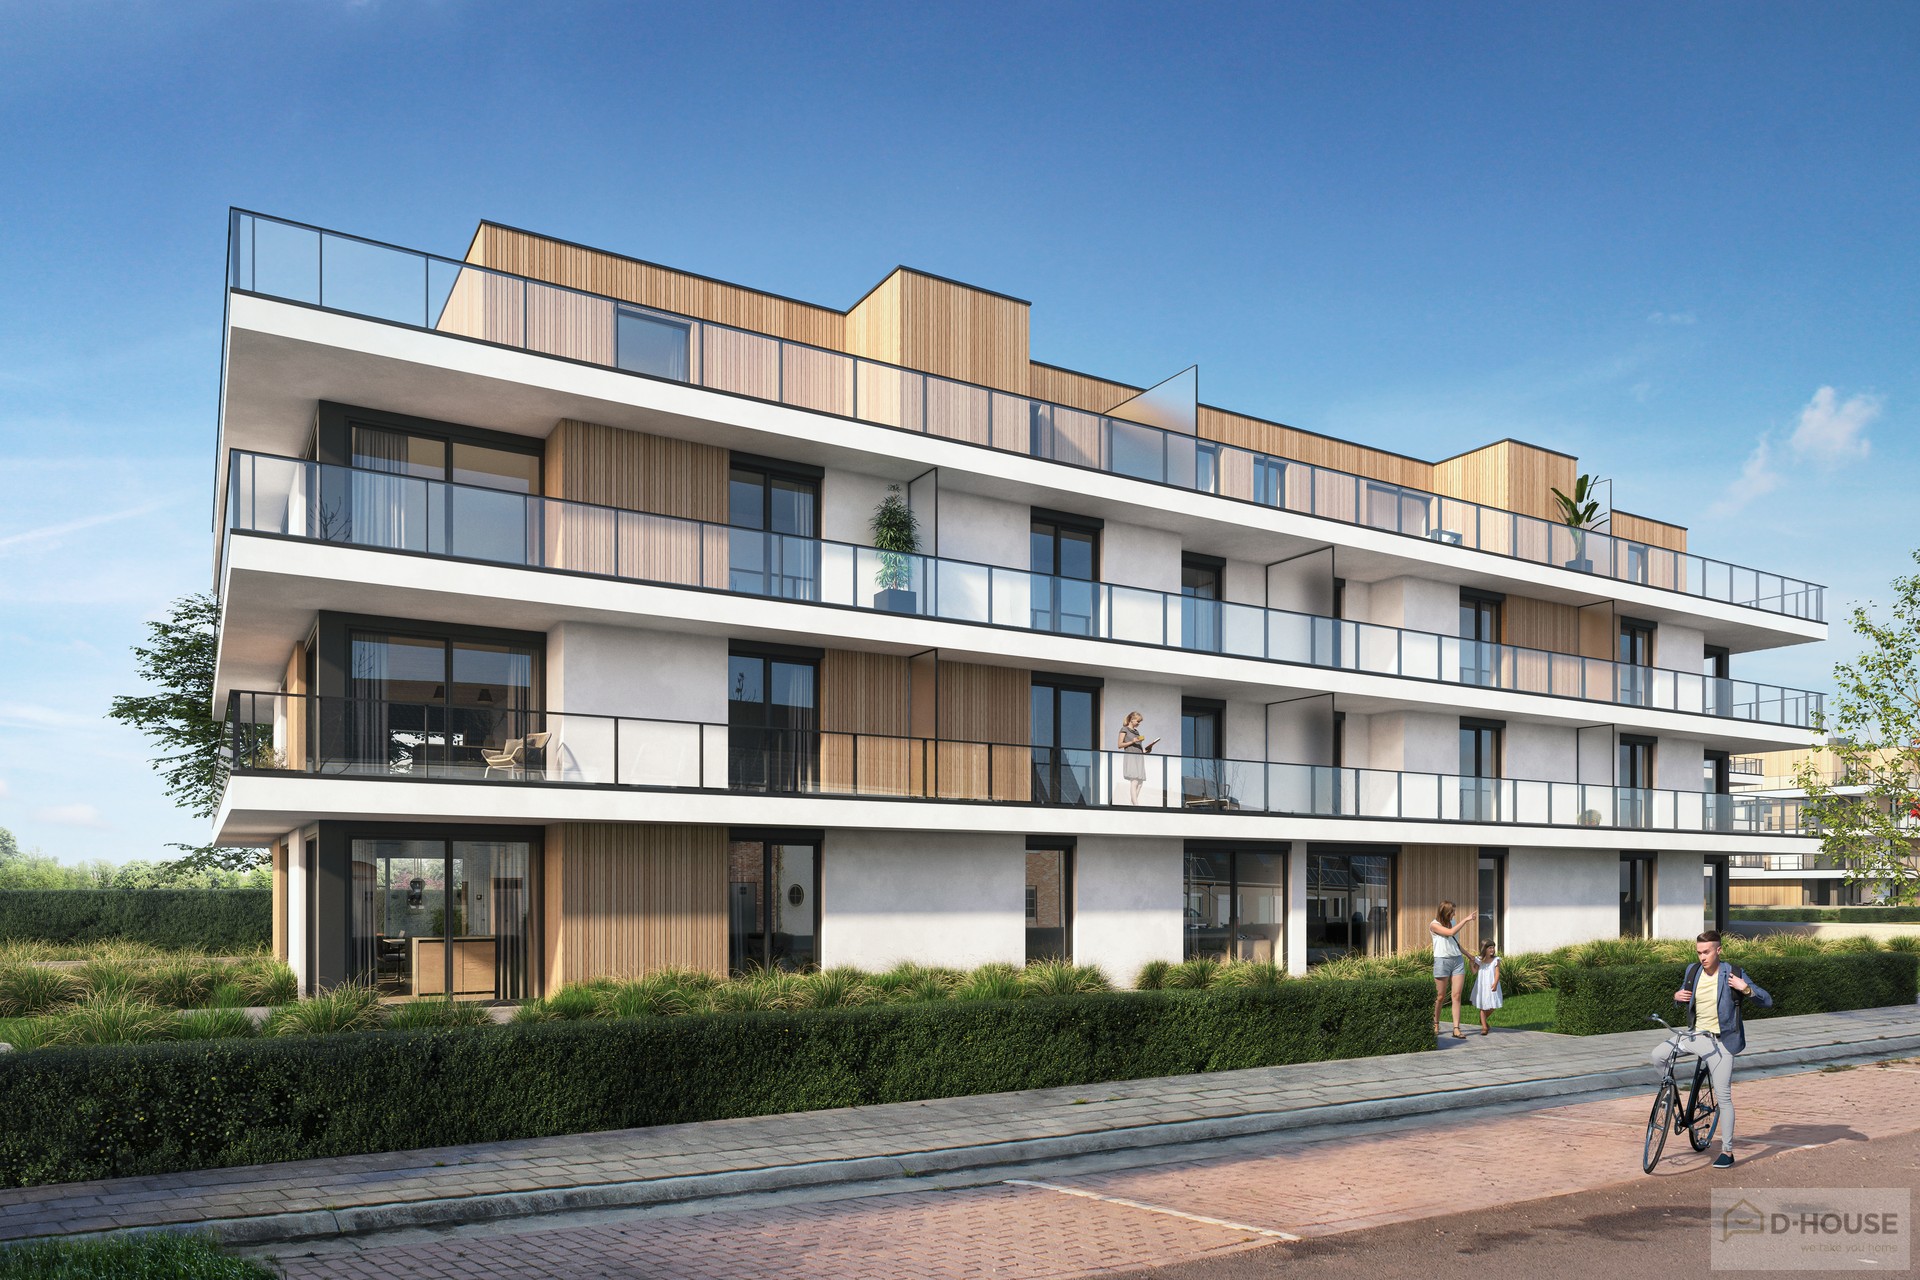 Nieuwbouwproject bestaande uit 15 moderne appartementen te Gullegem (FASE I).